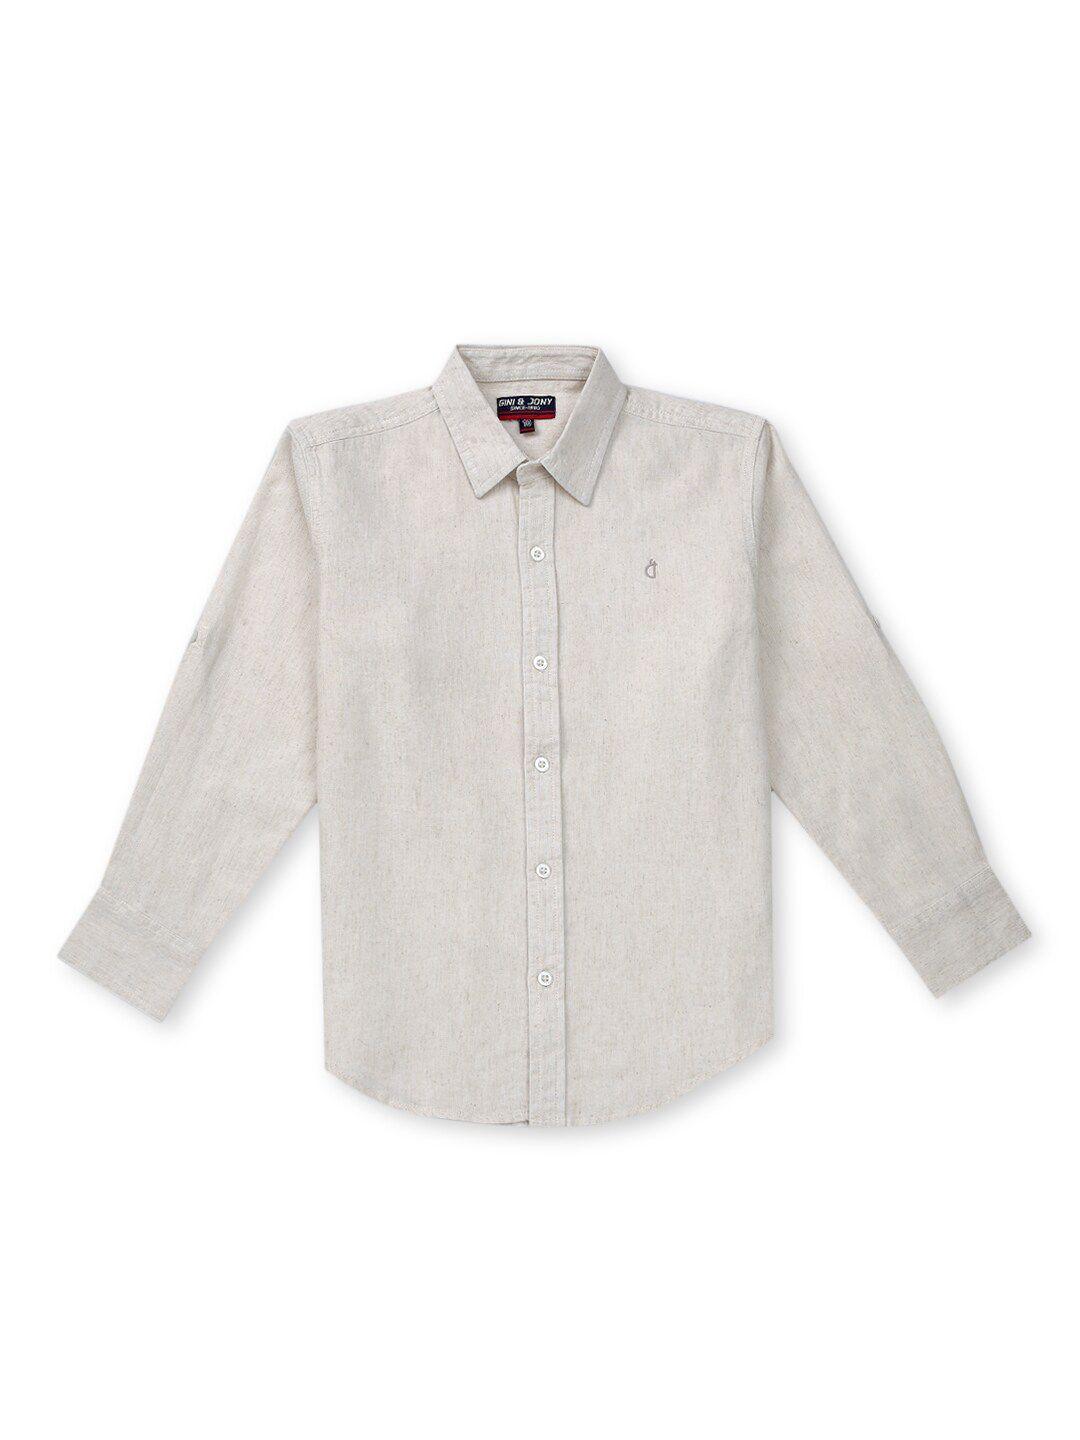 gini-and-jony-boys-spread-collar-long-sleeves-casual-cotton-shirt